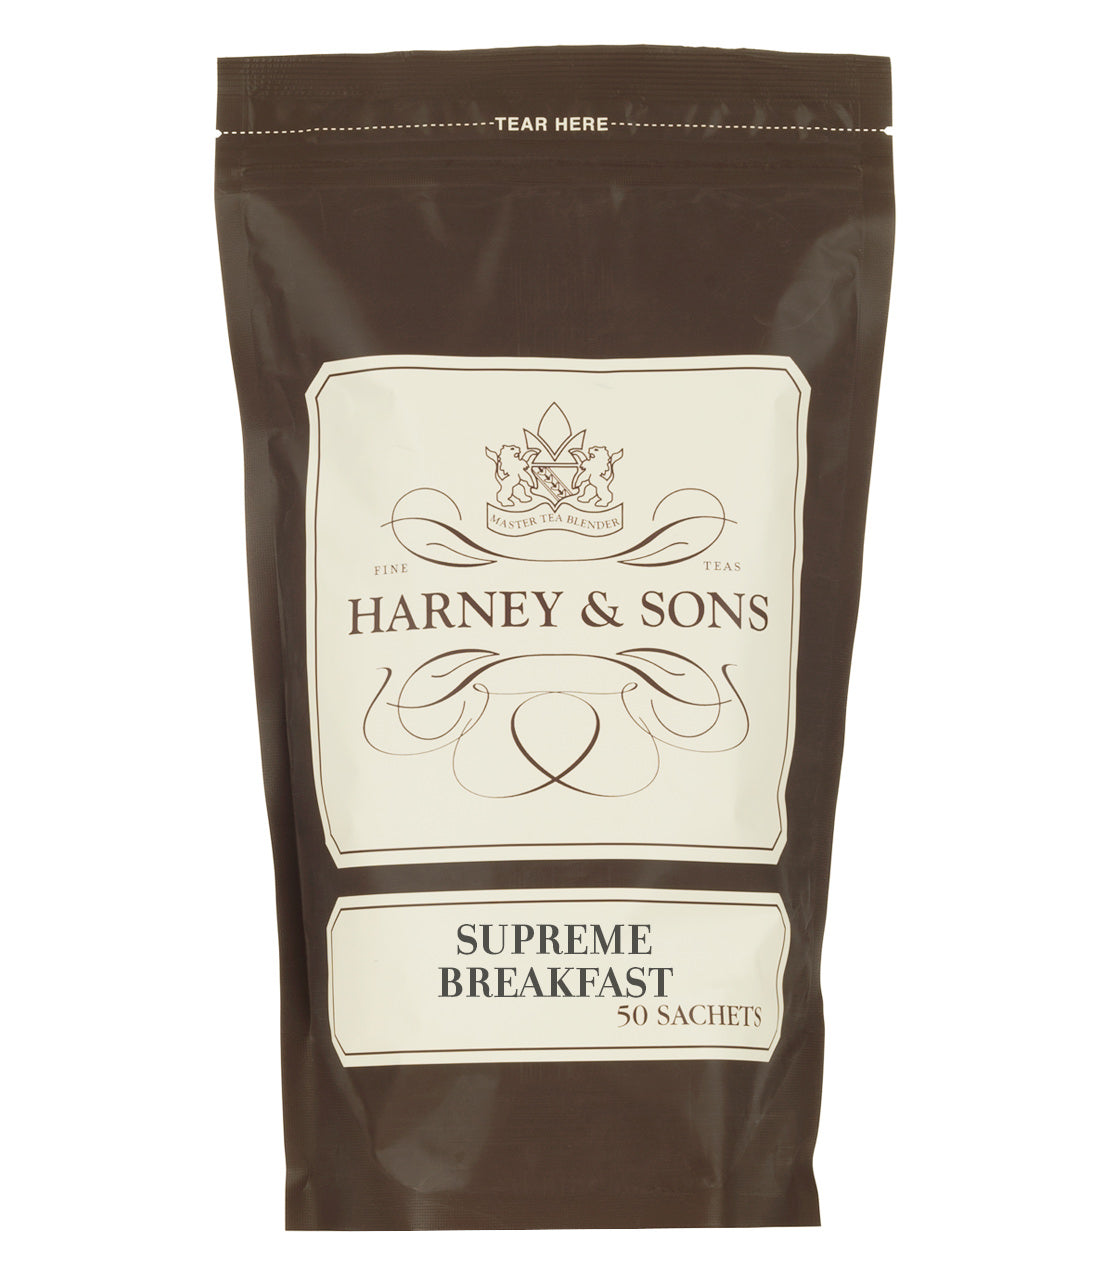 Supreme Breakfast - Sachets Bag of 50 Sachets - Harney & Sons Fine Teas